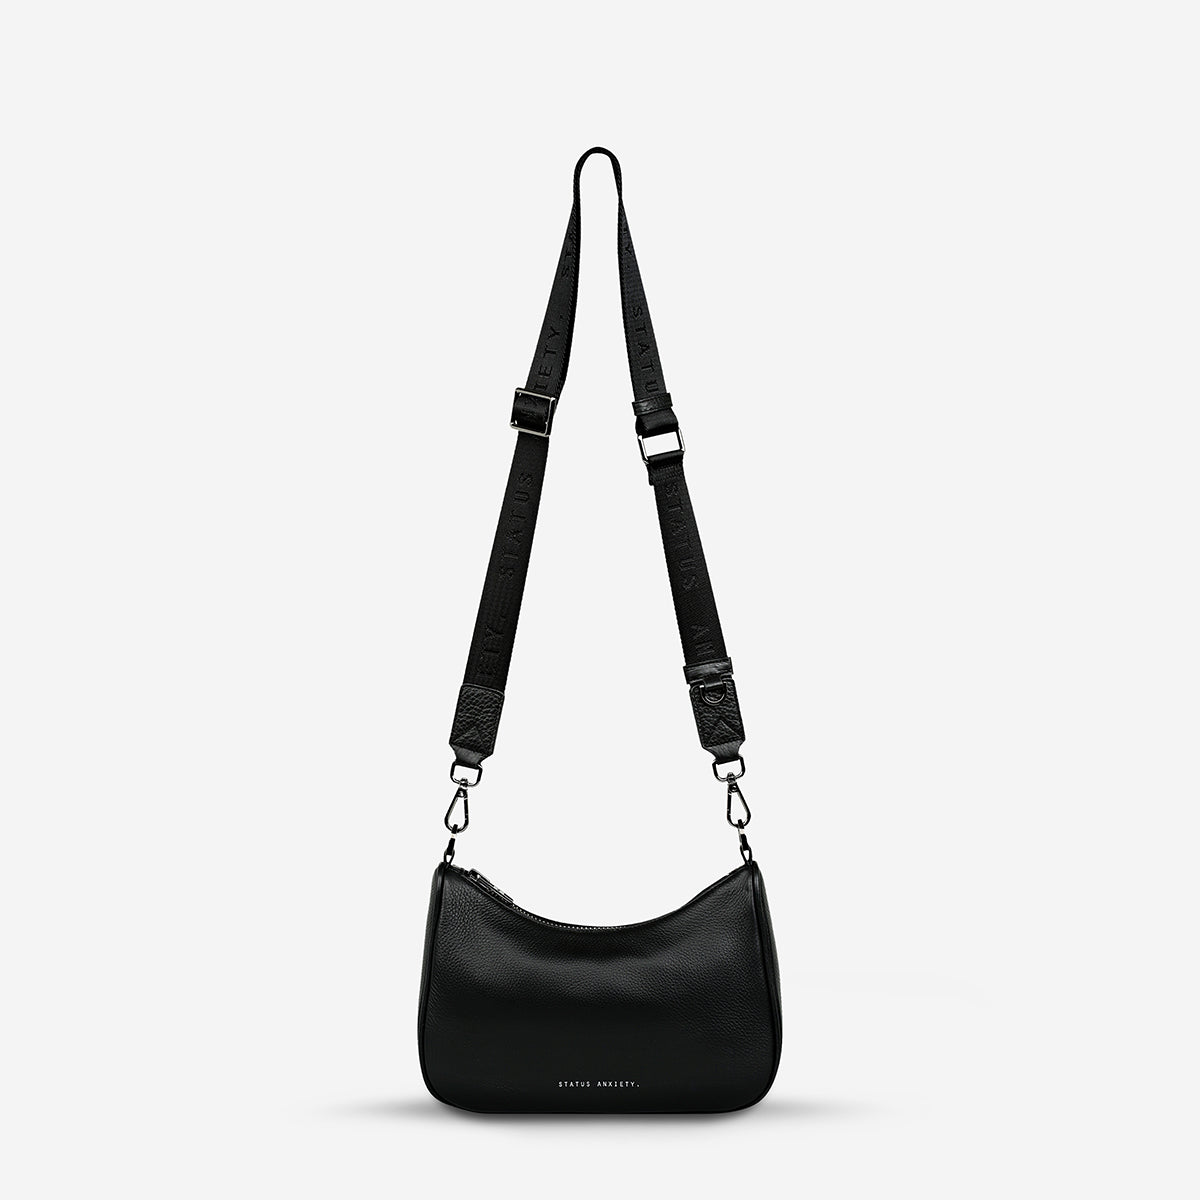 Hello Kitty Black Leather Hand Bag with Detachable Long Strap - Walmart.com